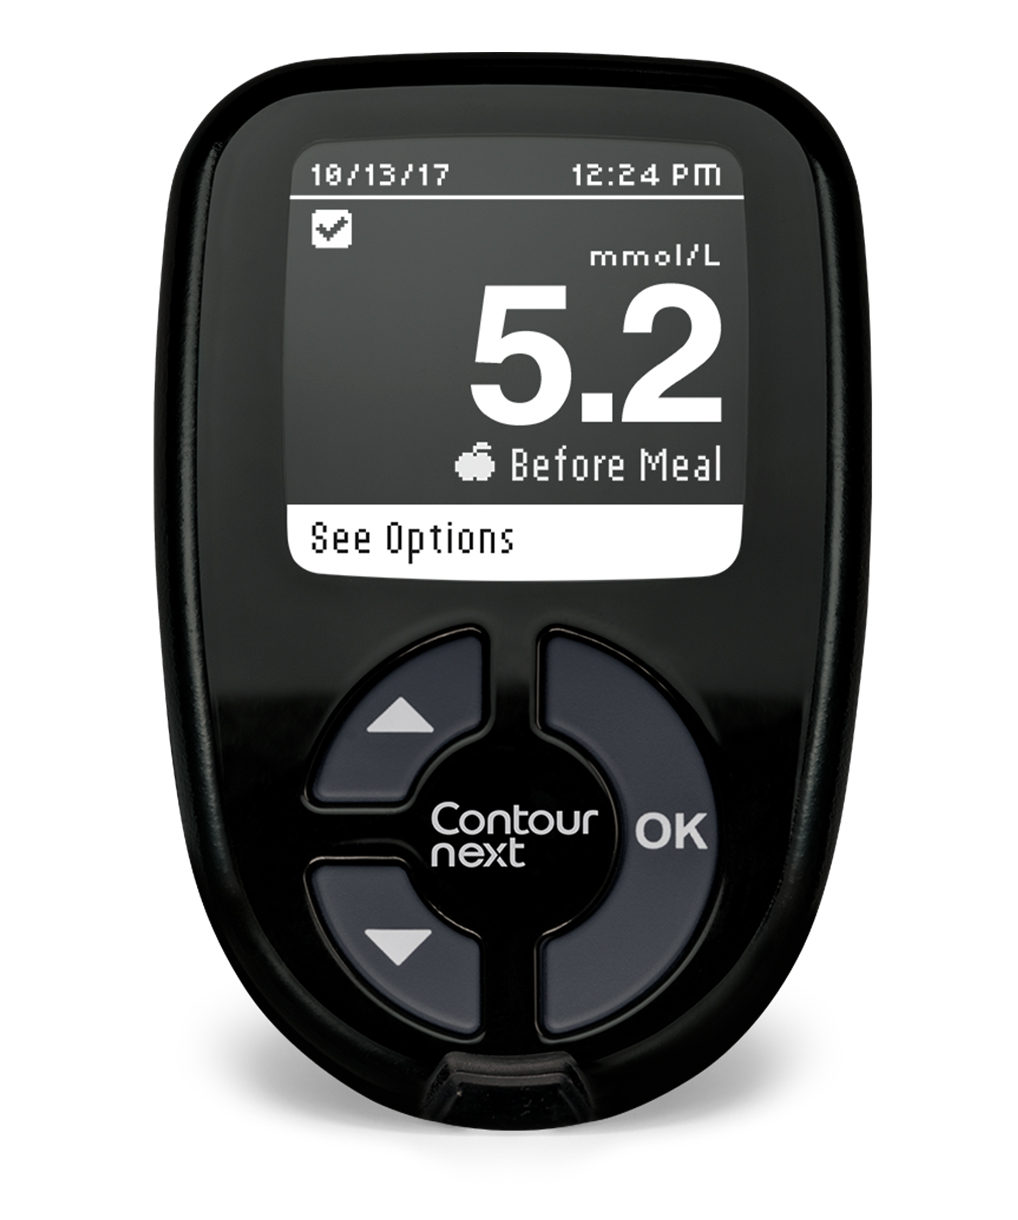 bayer glucose meter software download